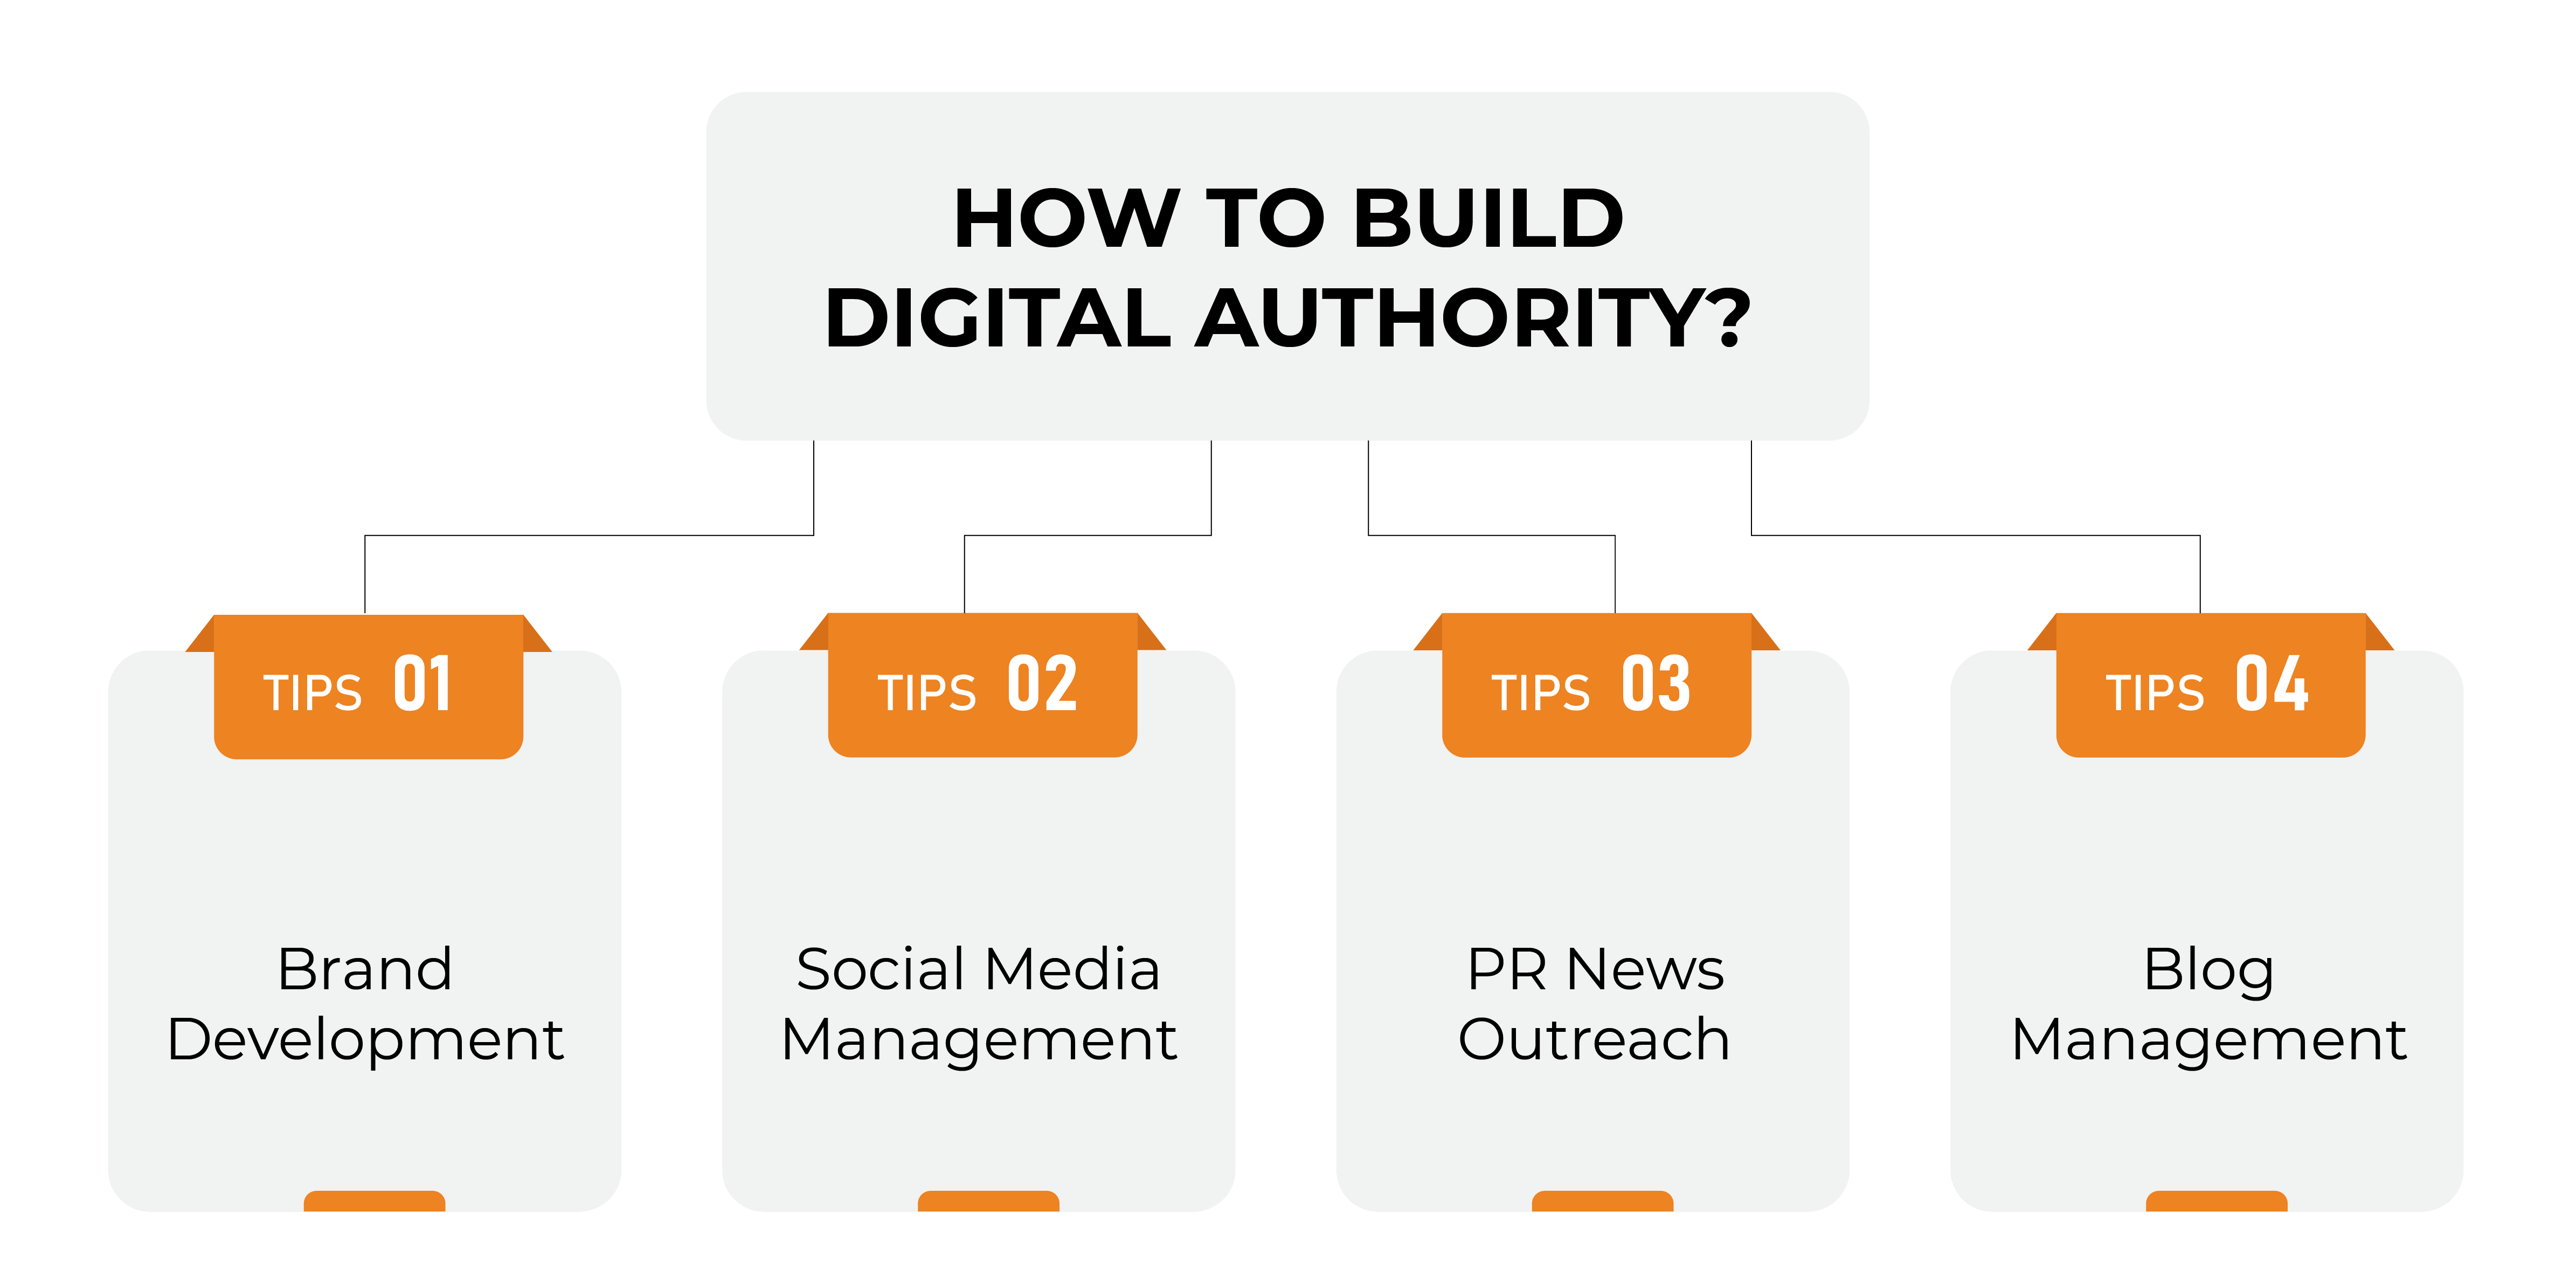 Build digital authority